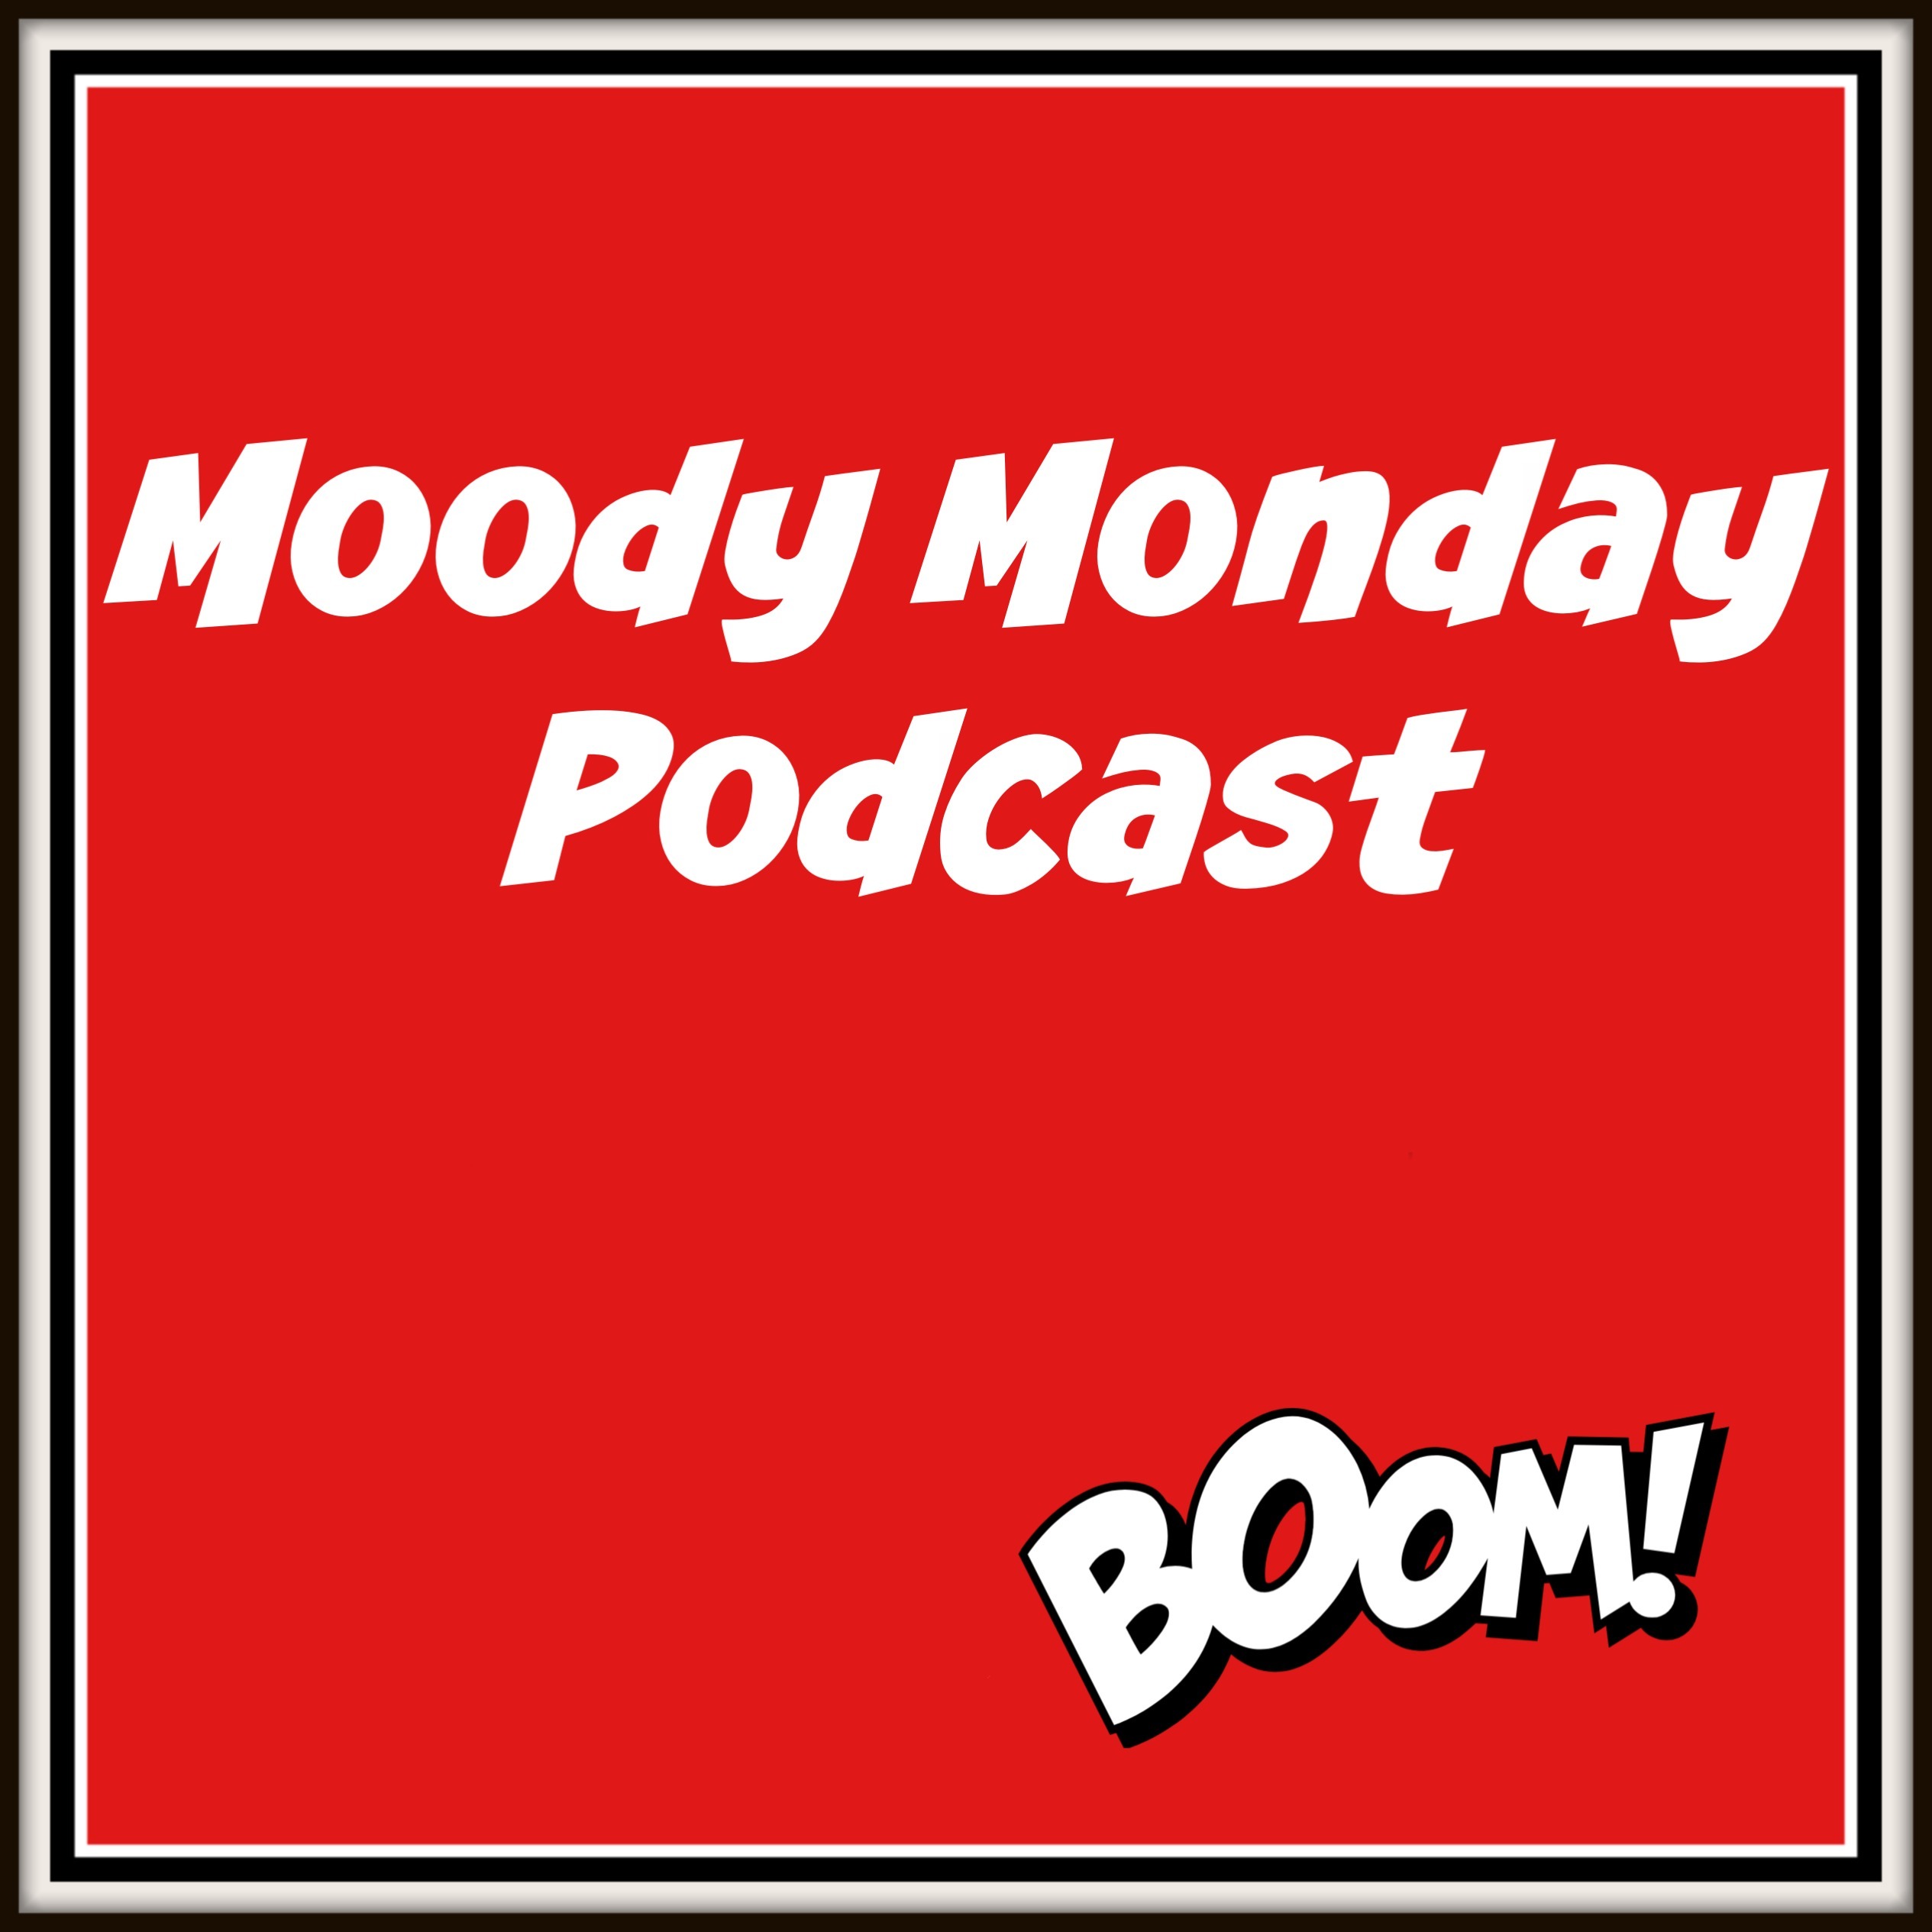 Episode 6: Moody Monday Podcast 006